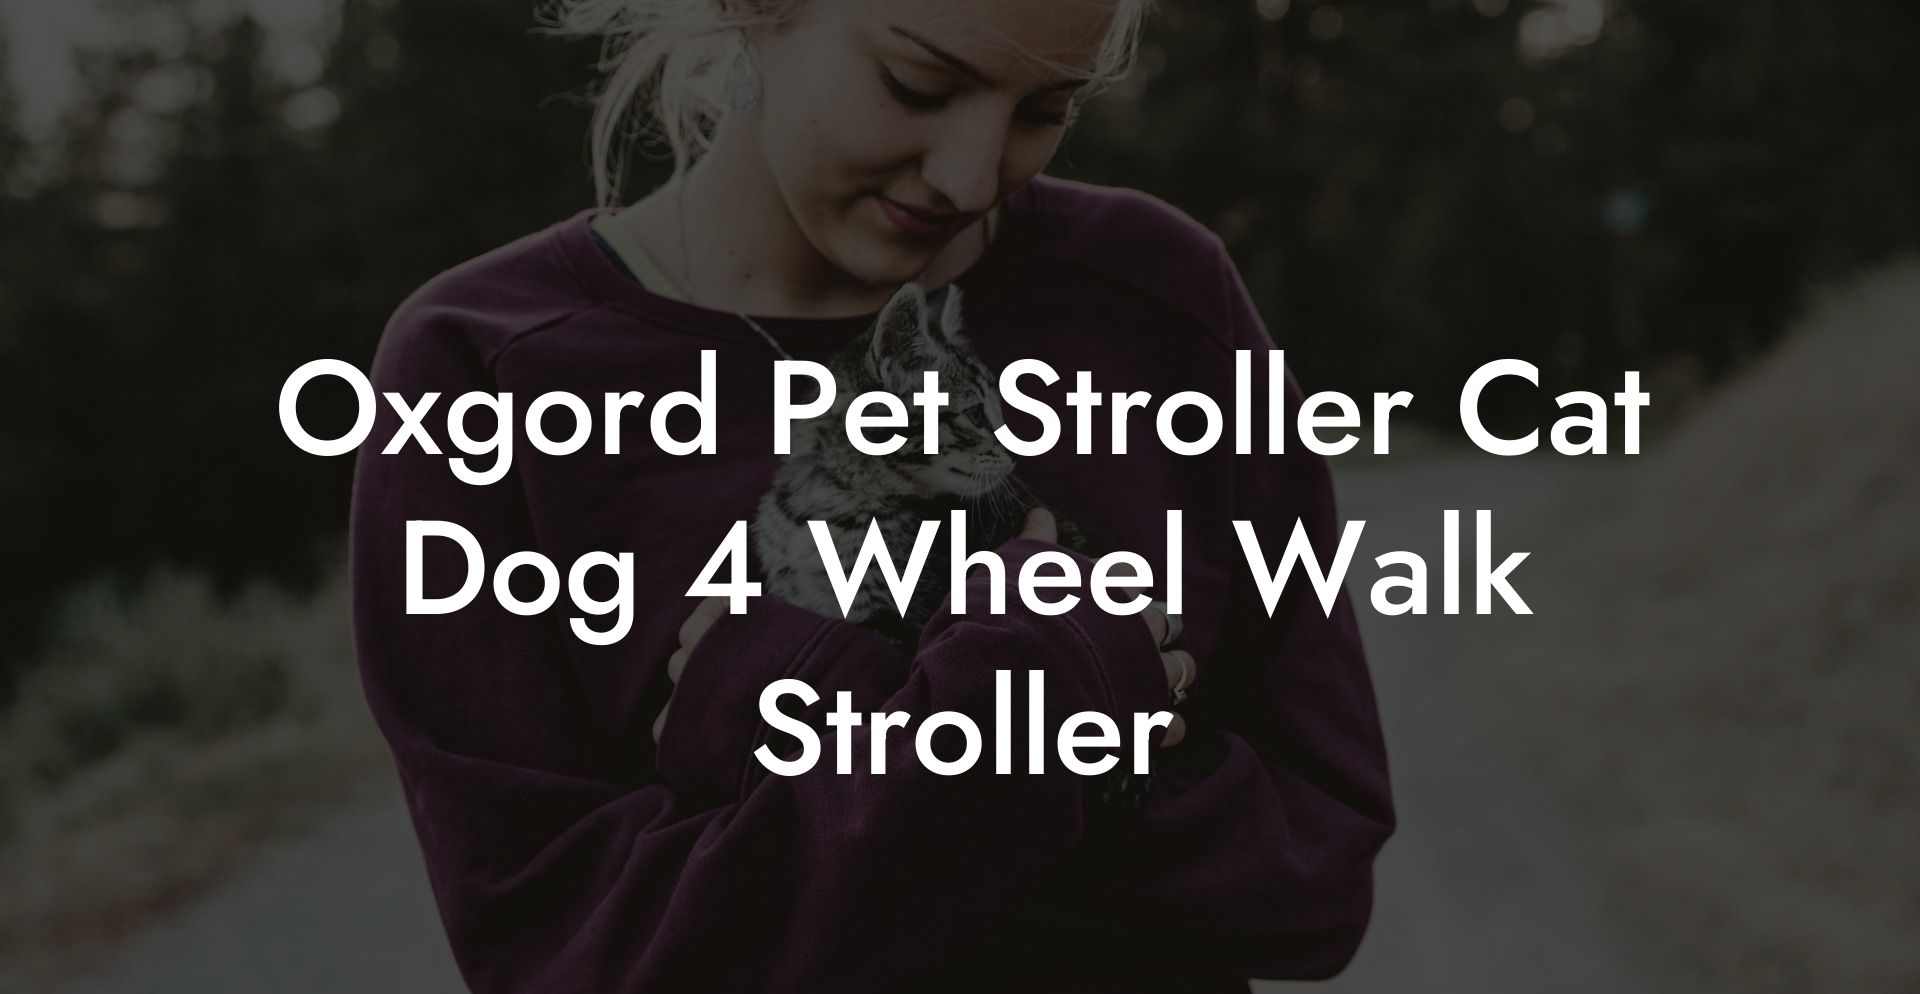 Oxgord Pet Stroller Cat Dog 4 Wheel Walk Stroller